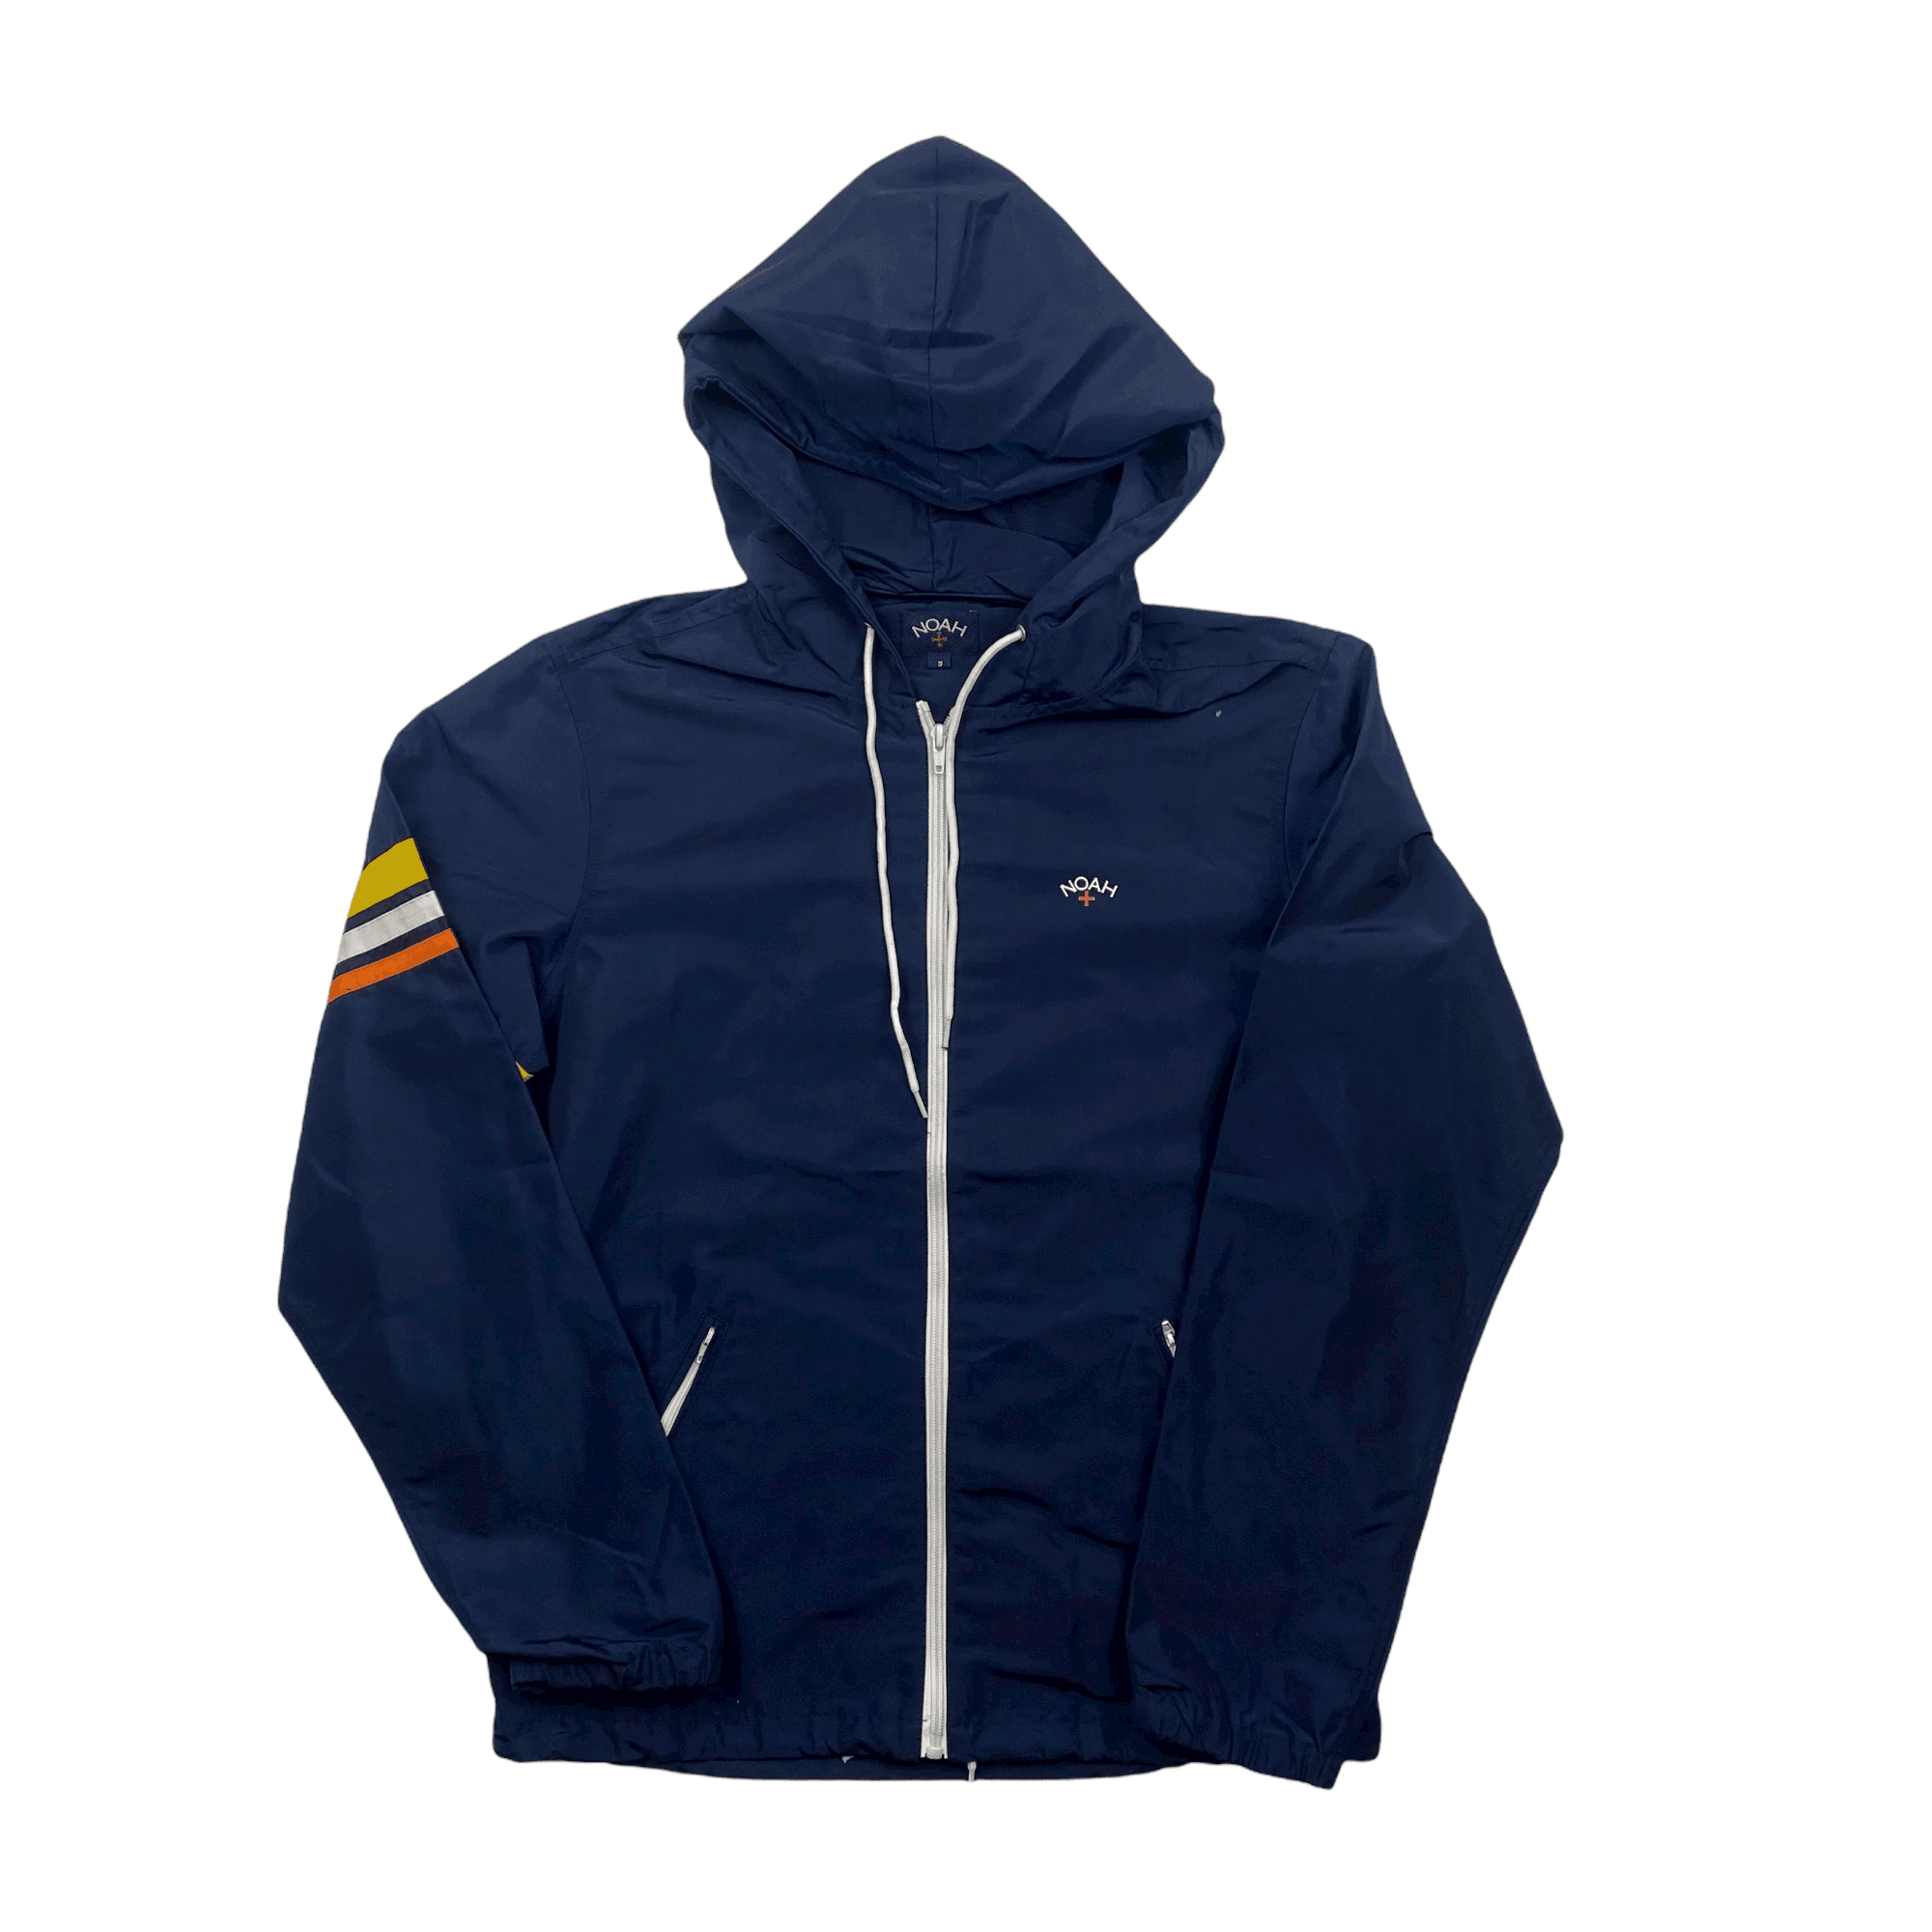 Navy Blue Noah Full Zip Waterproof Jacket - Small - The Streetwear Studio